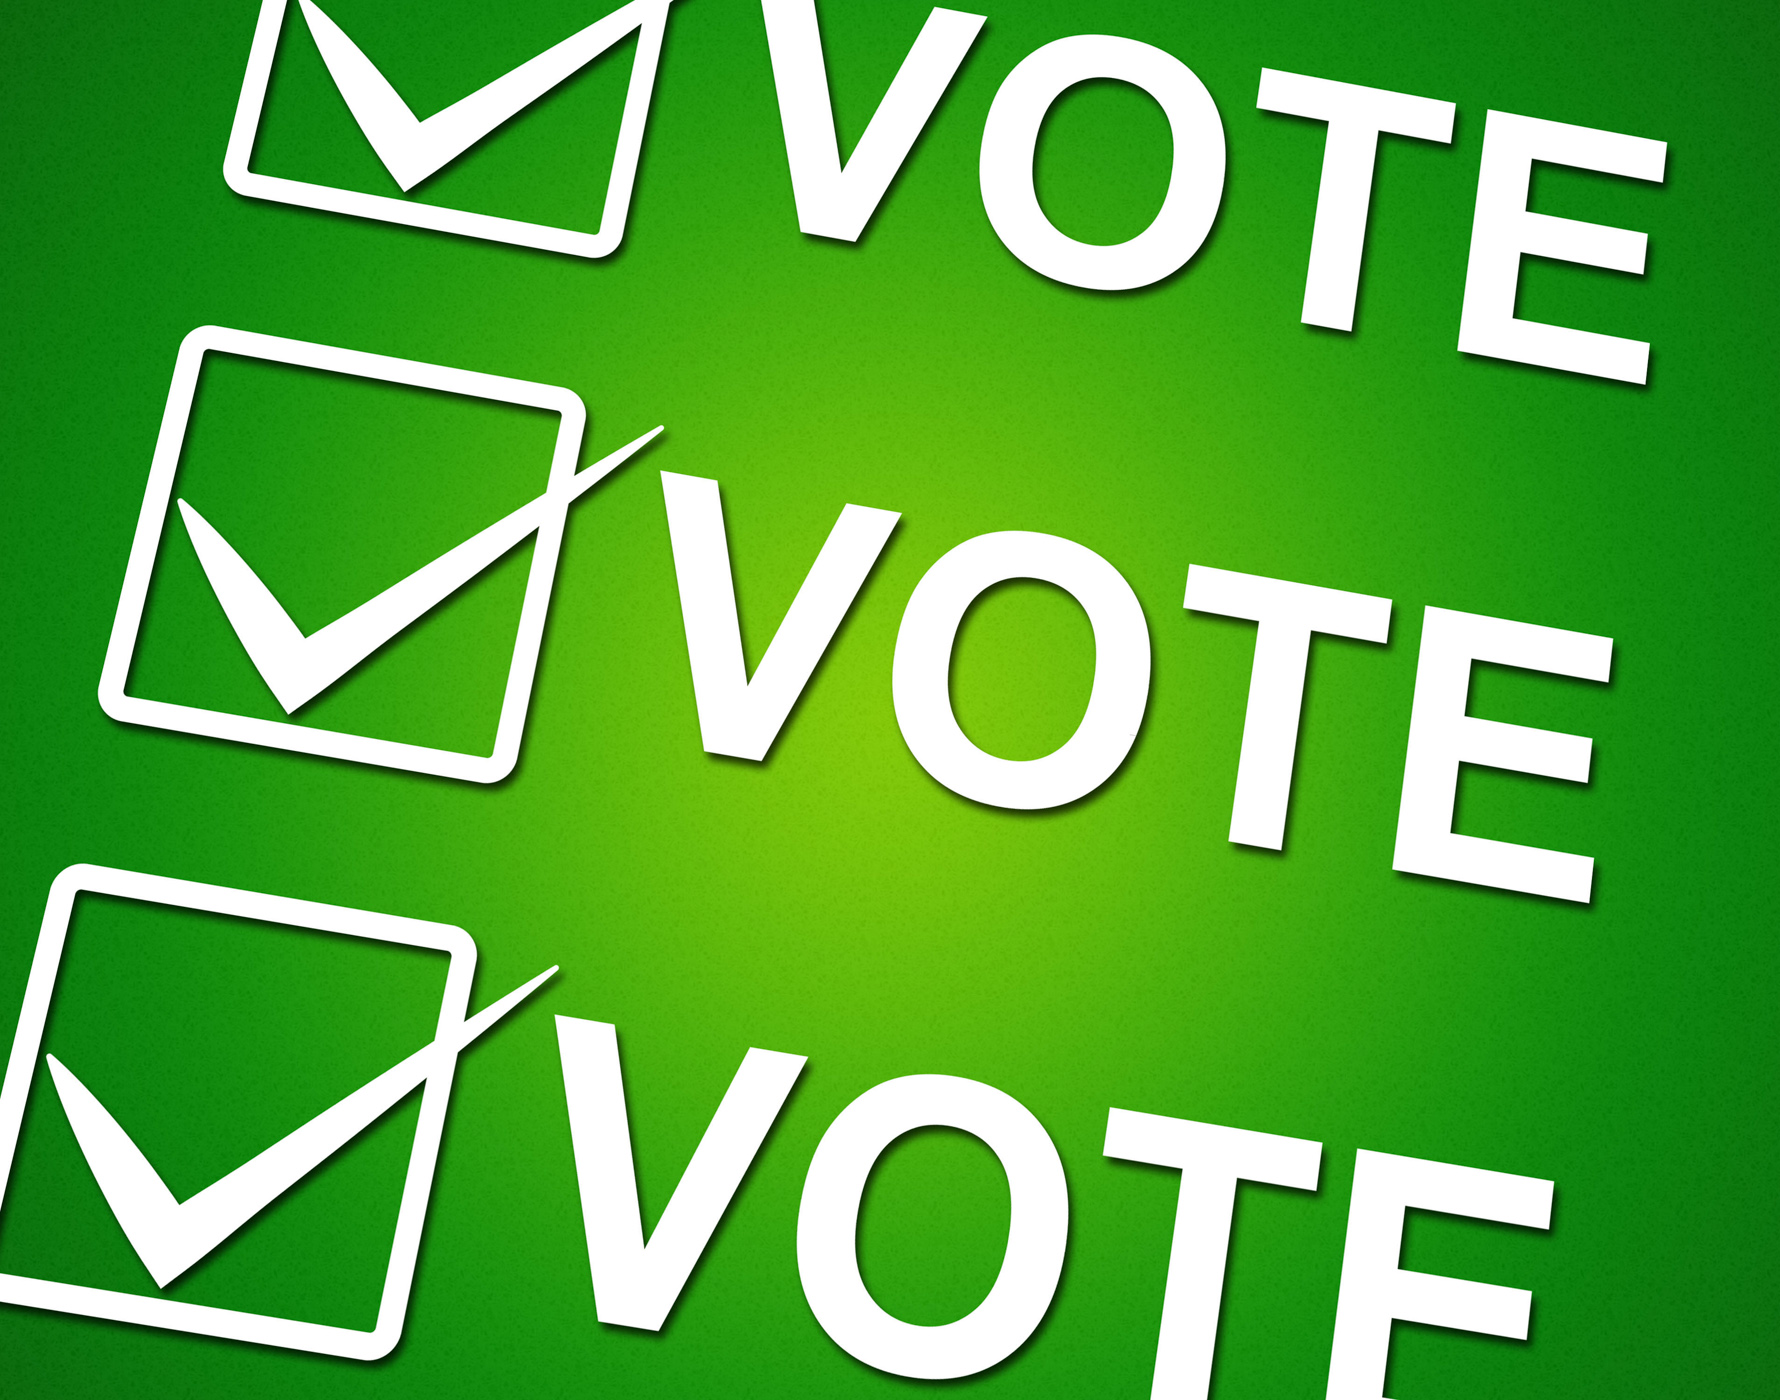 Vote ticks indicates choosing voting and choose photo